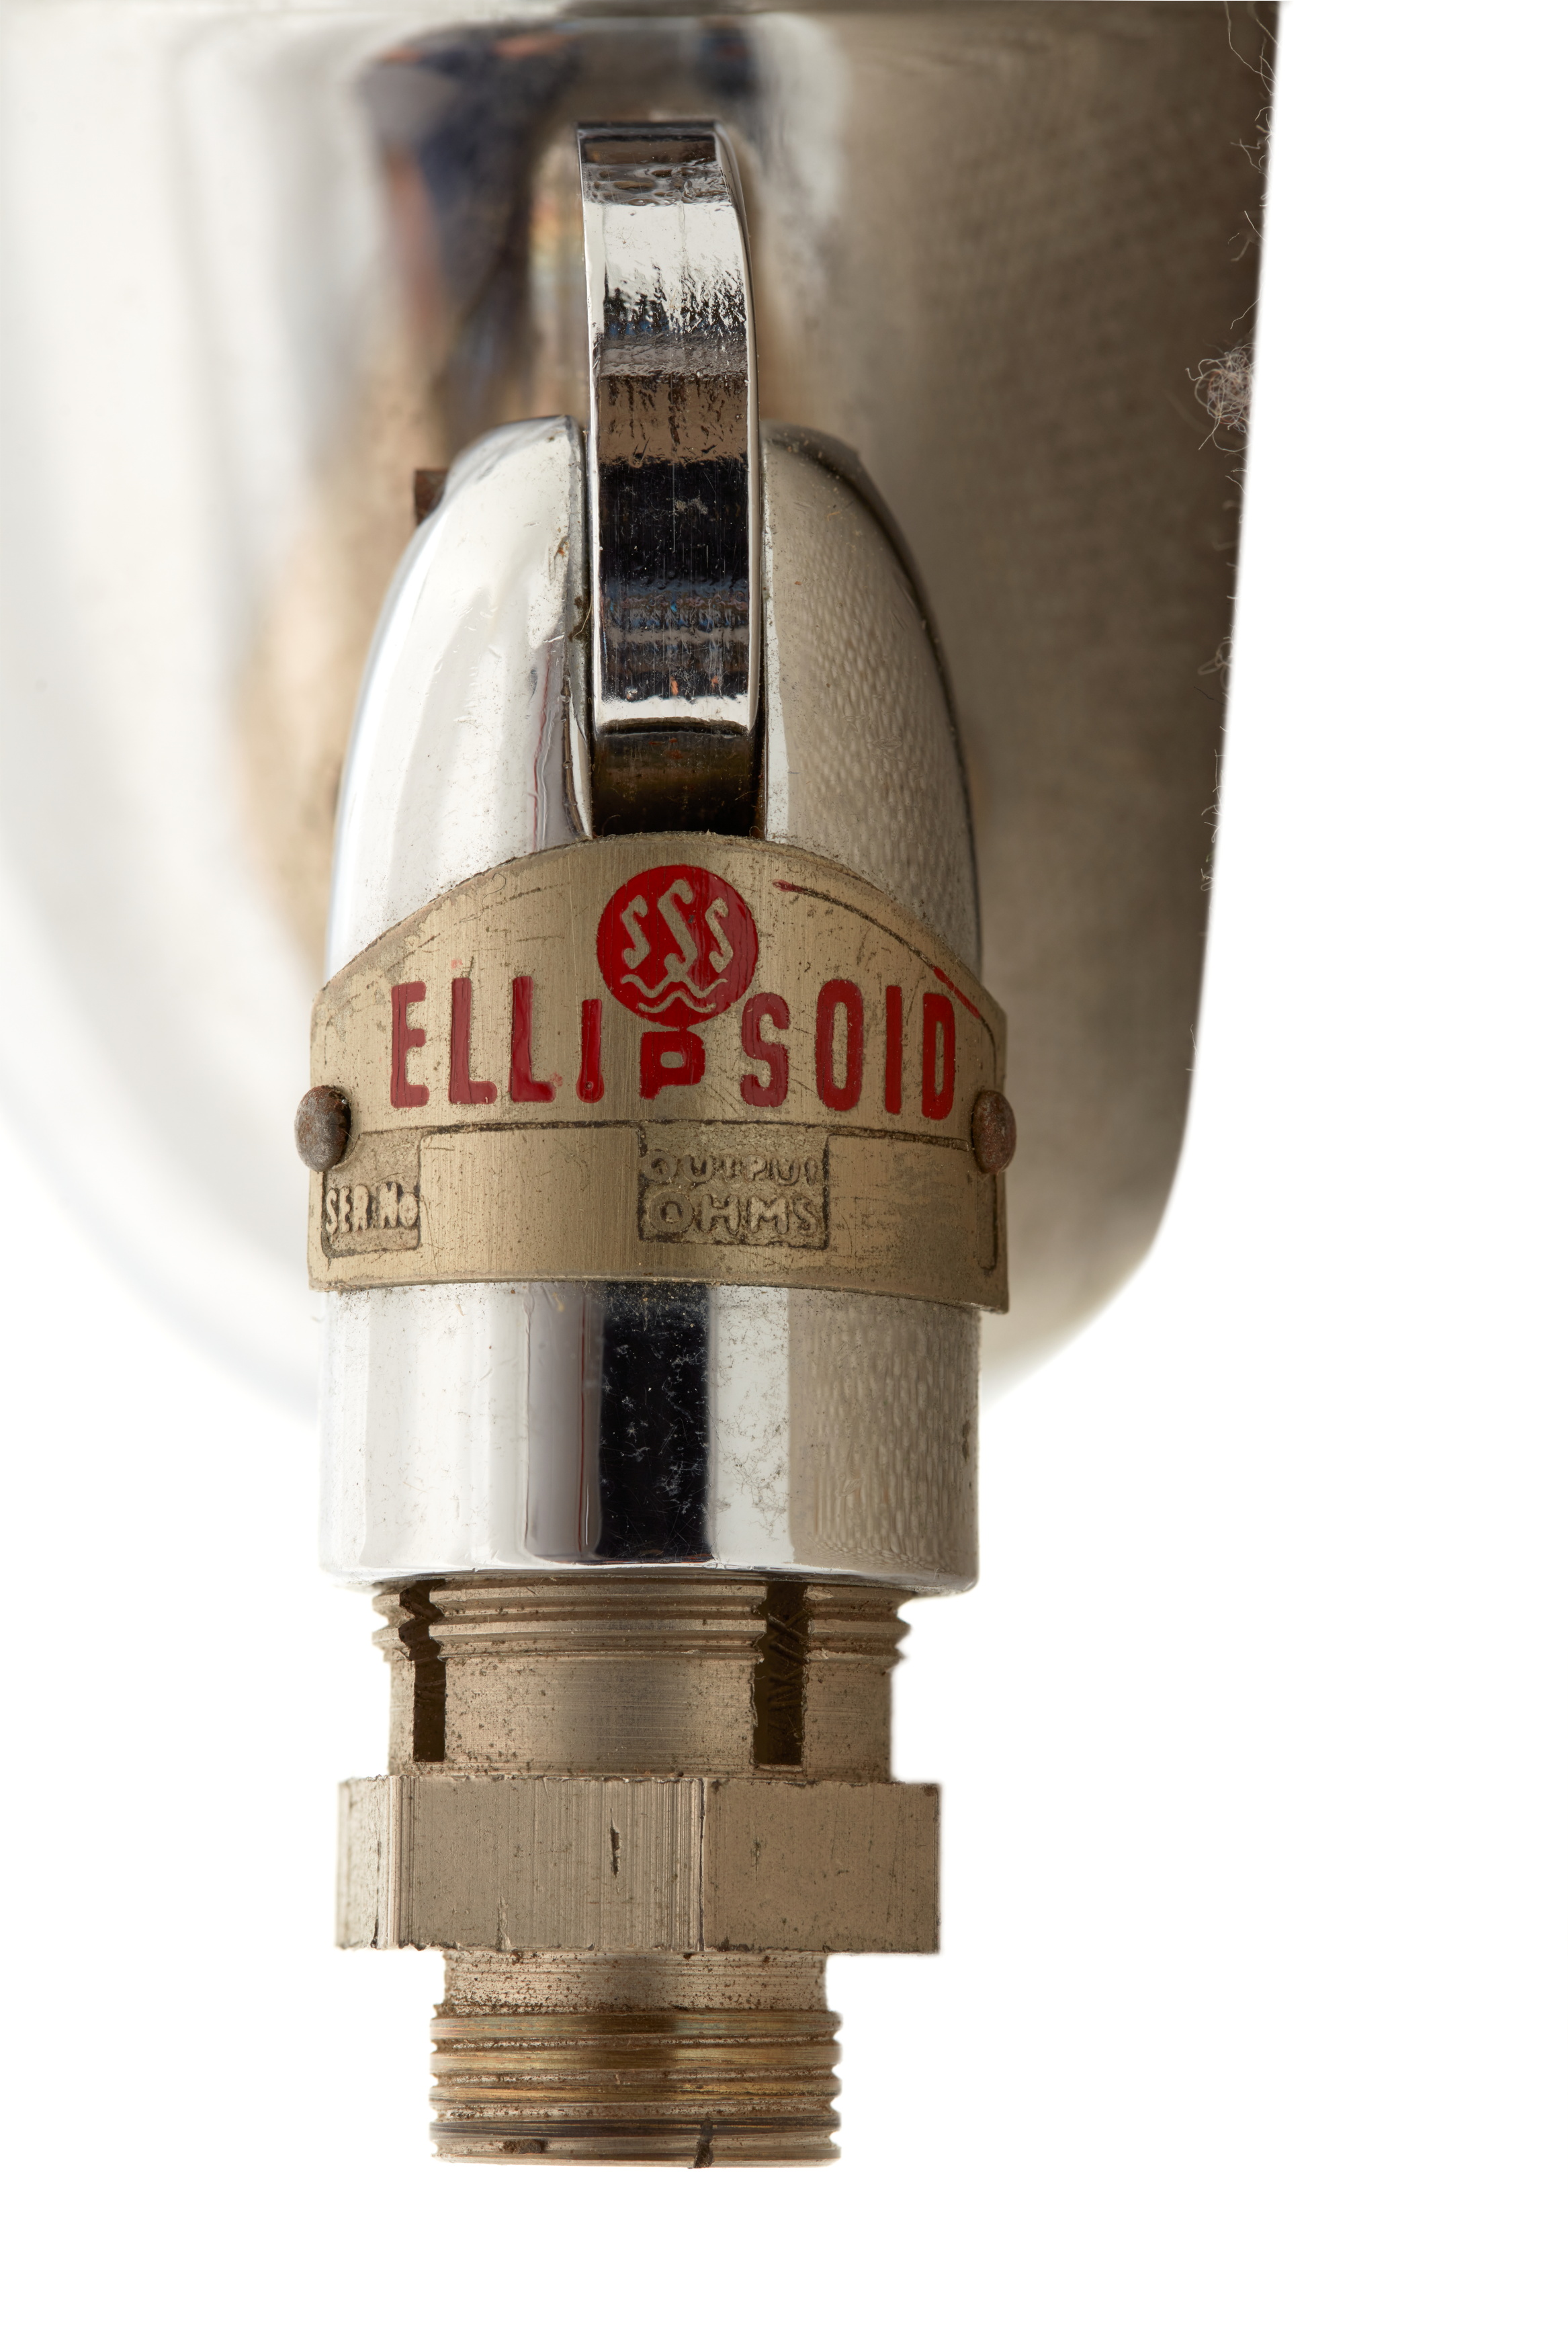 'Ellipsoid' mircophone by Steanes Sound Systems Pty Ltd